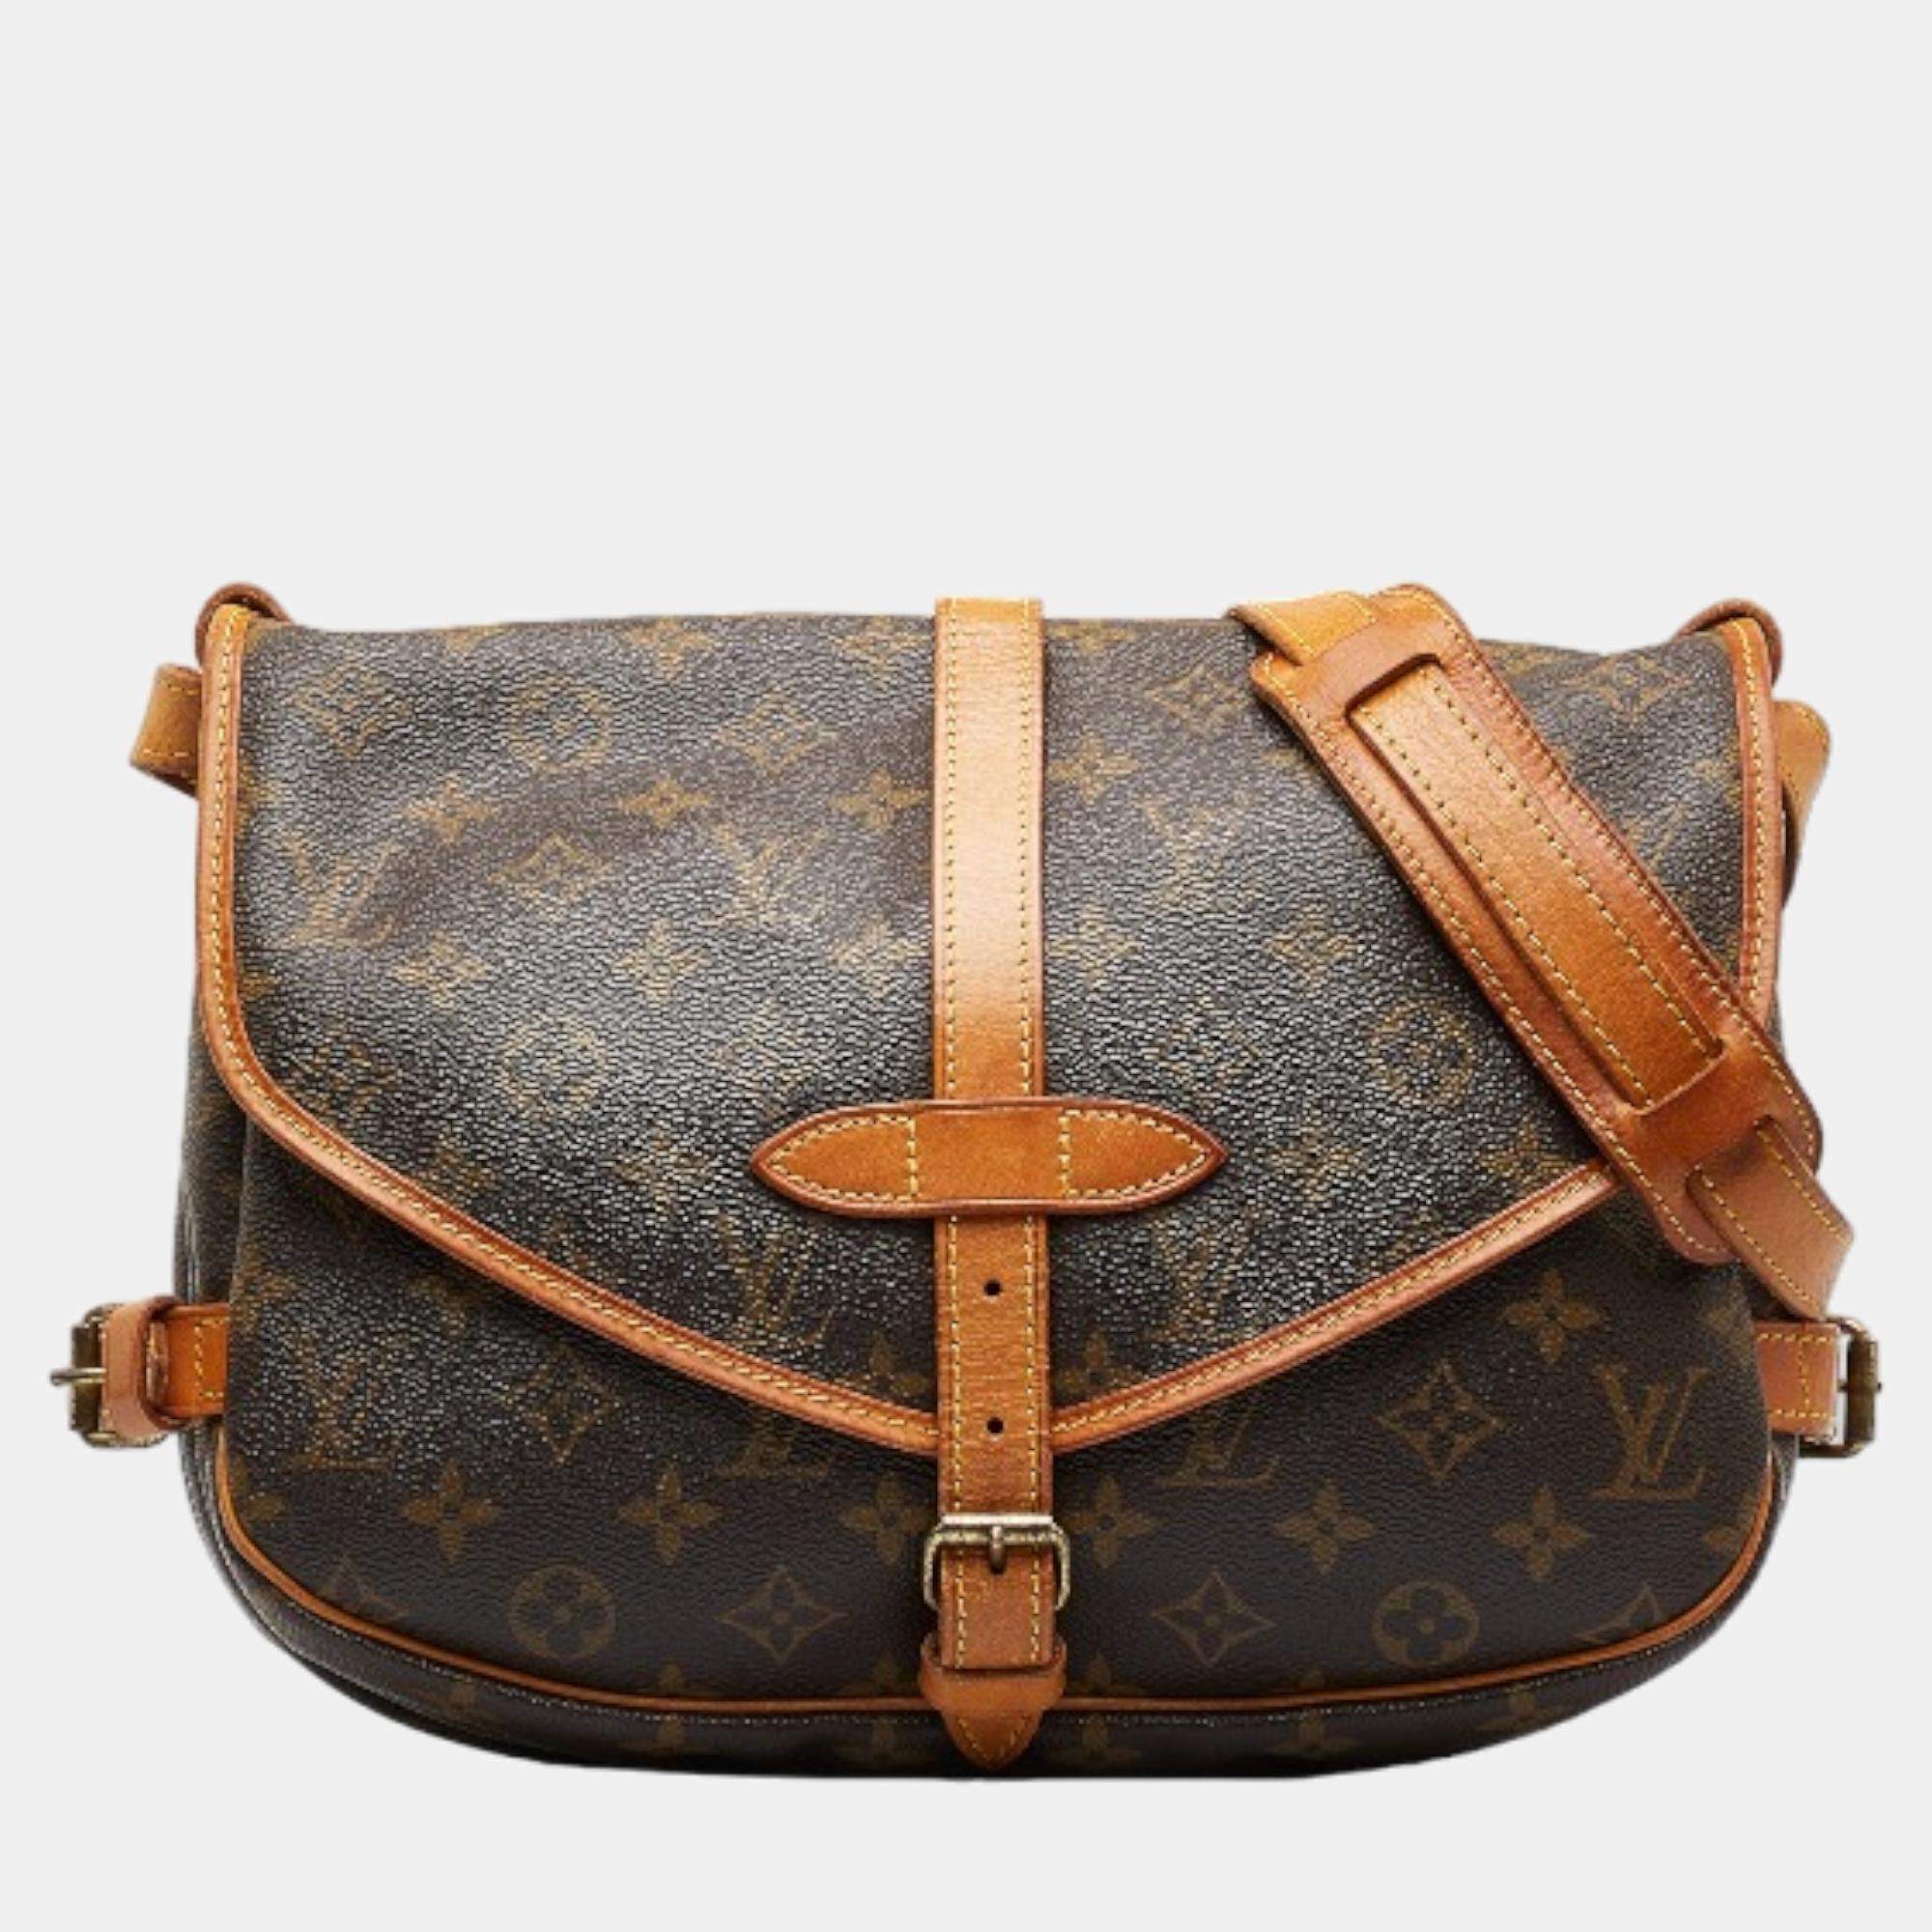 Louis Vuitton Soho Backpack - Luxe Du Jour